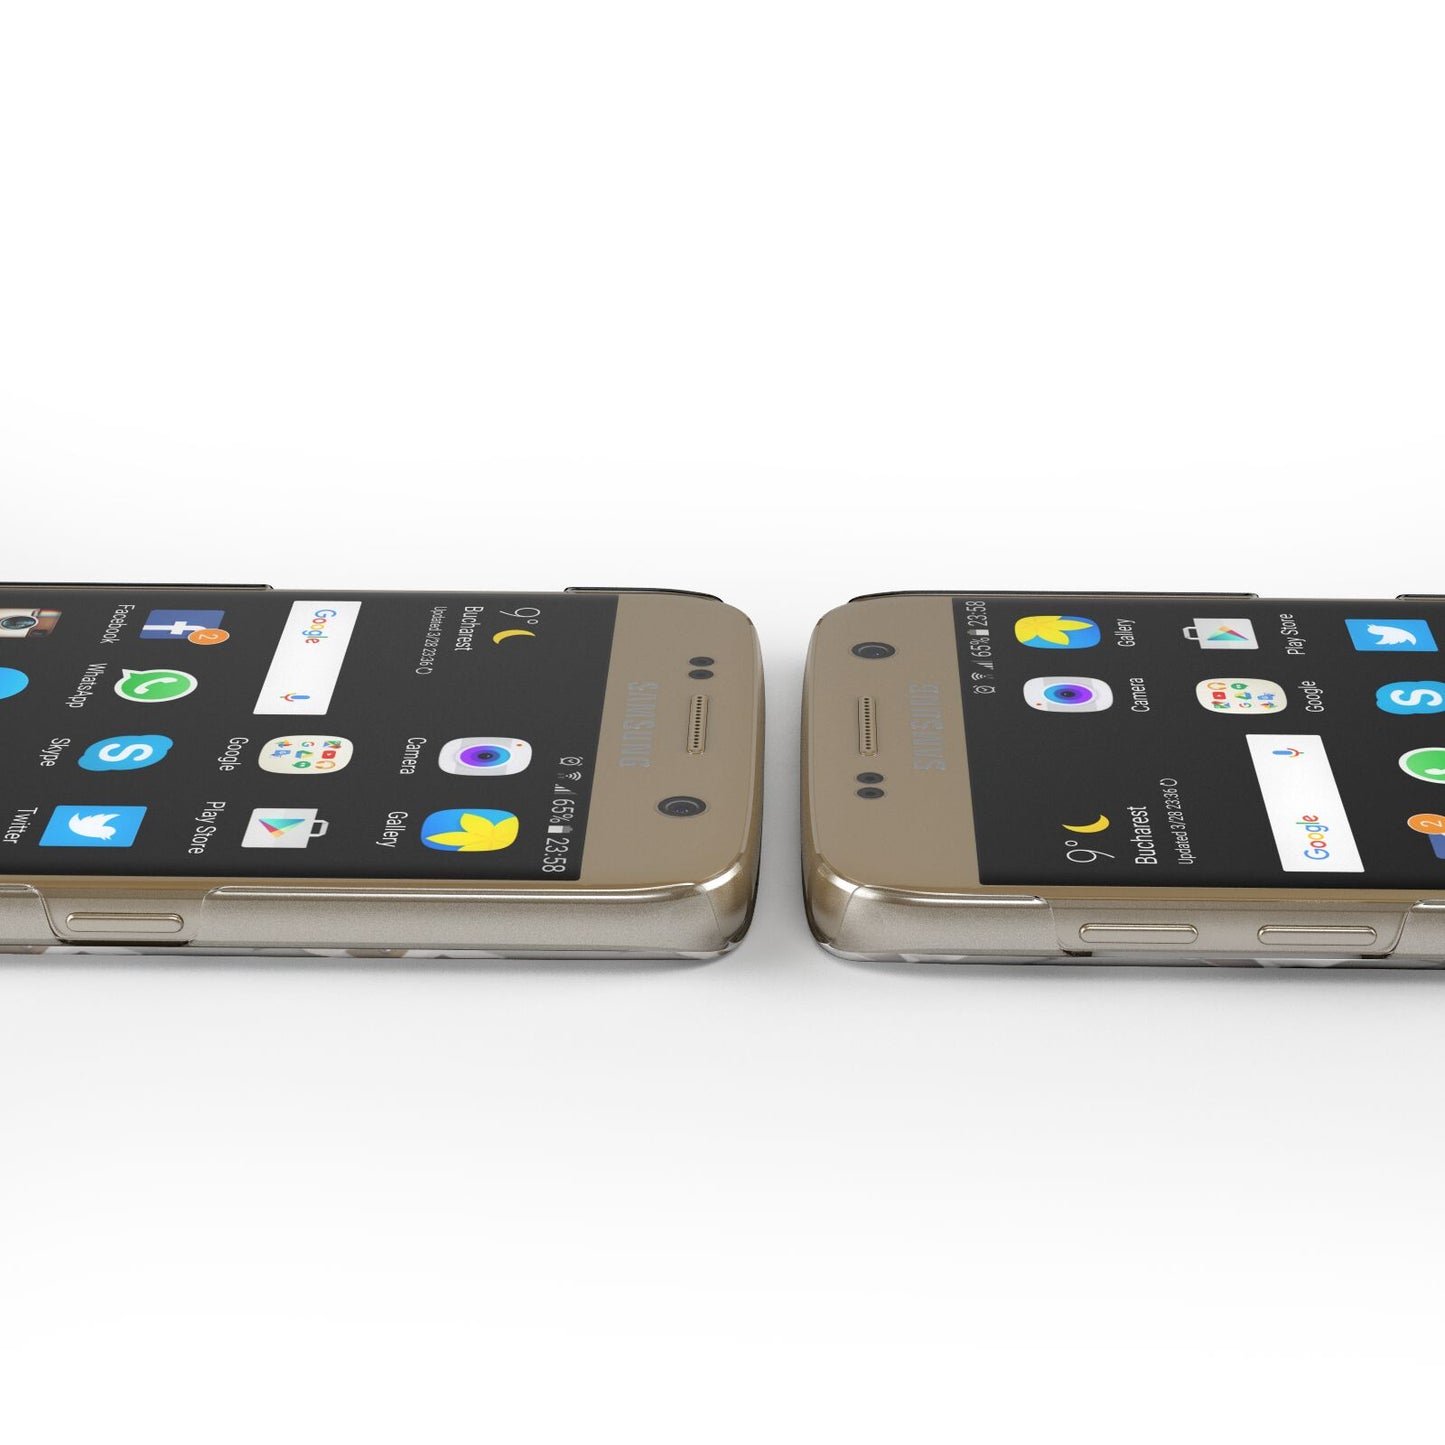 Boxer Icon with Name Samsung Galaxy Case Ports Cutout